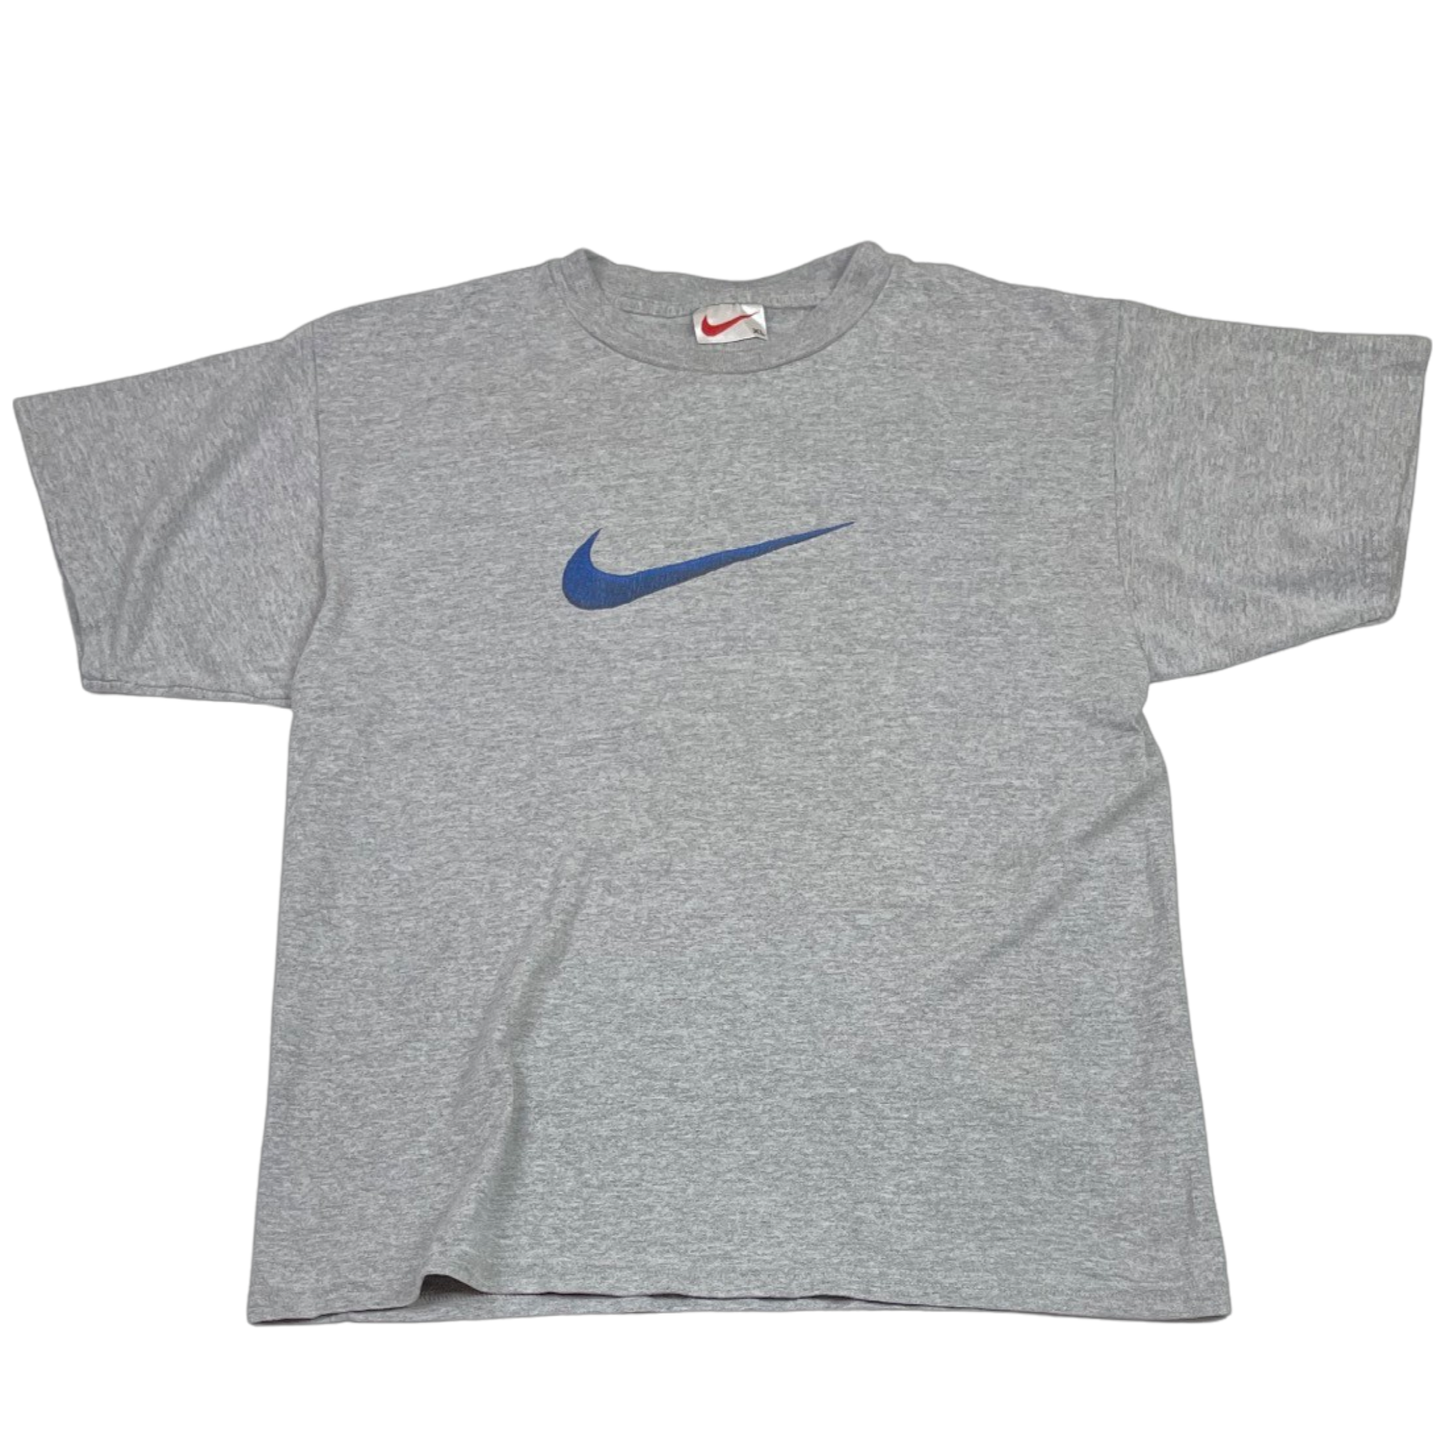 '90s Nike Swoosh Tee